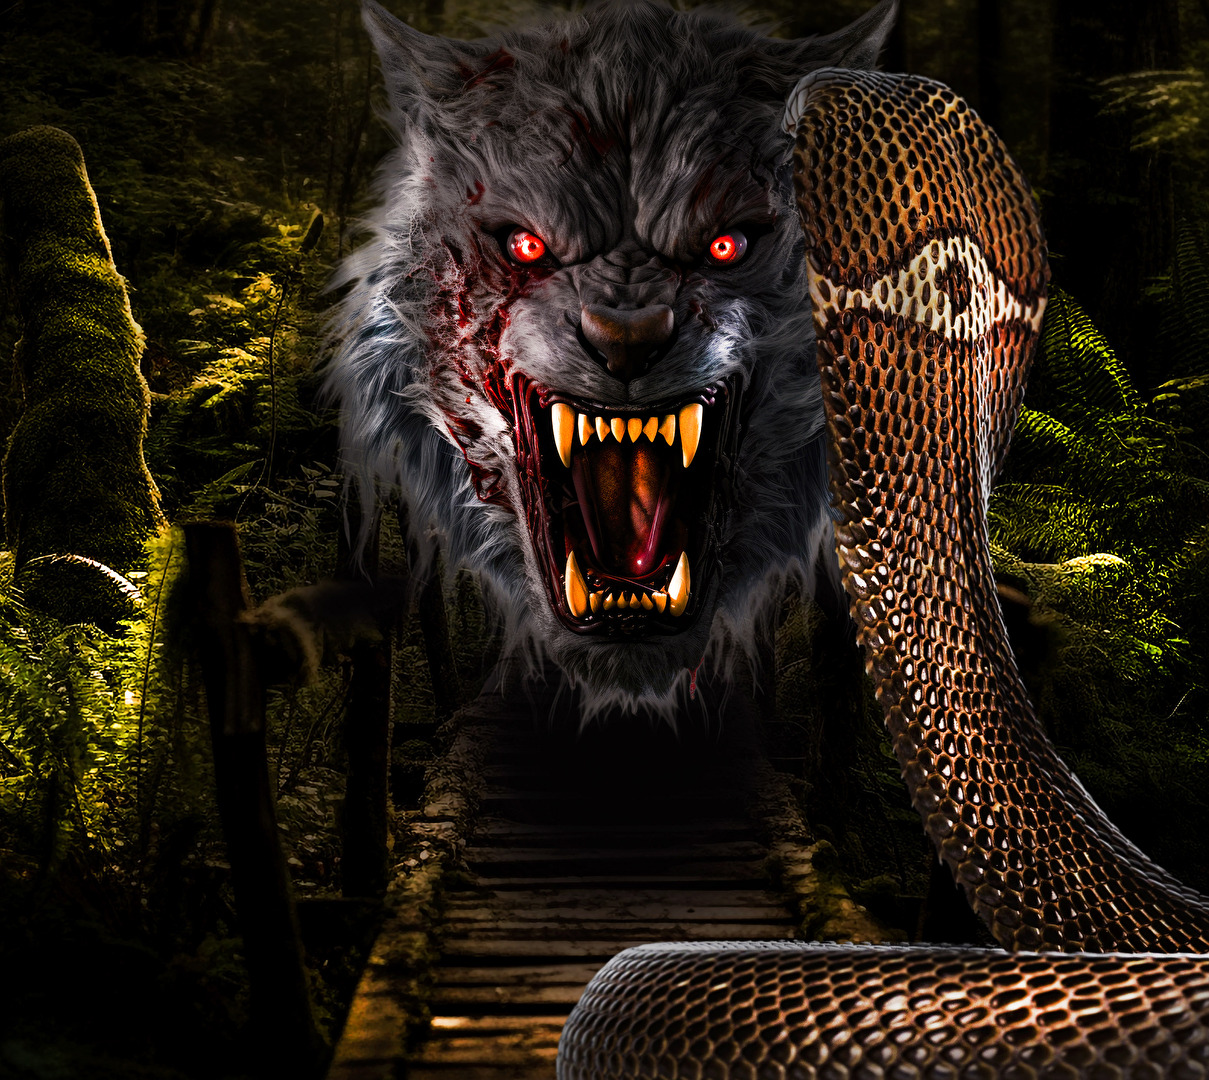 Werewolf vs Cobra